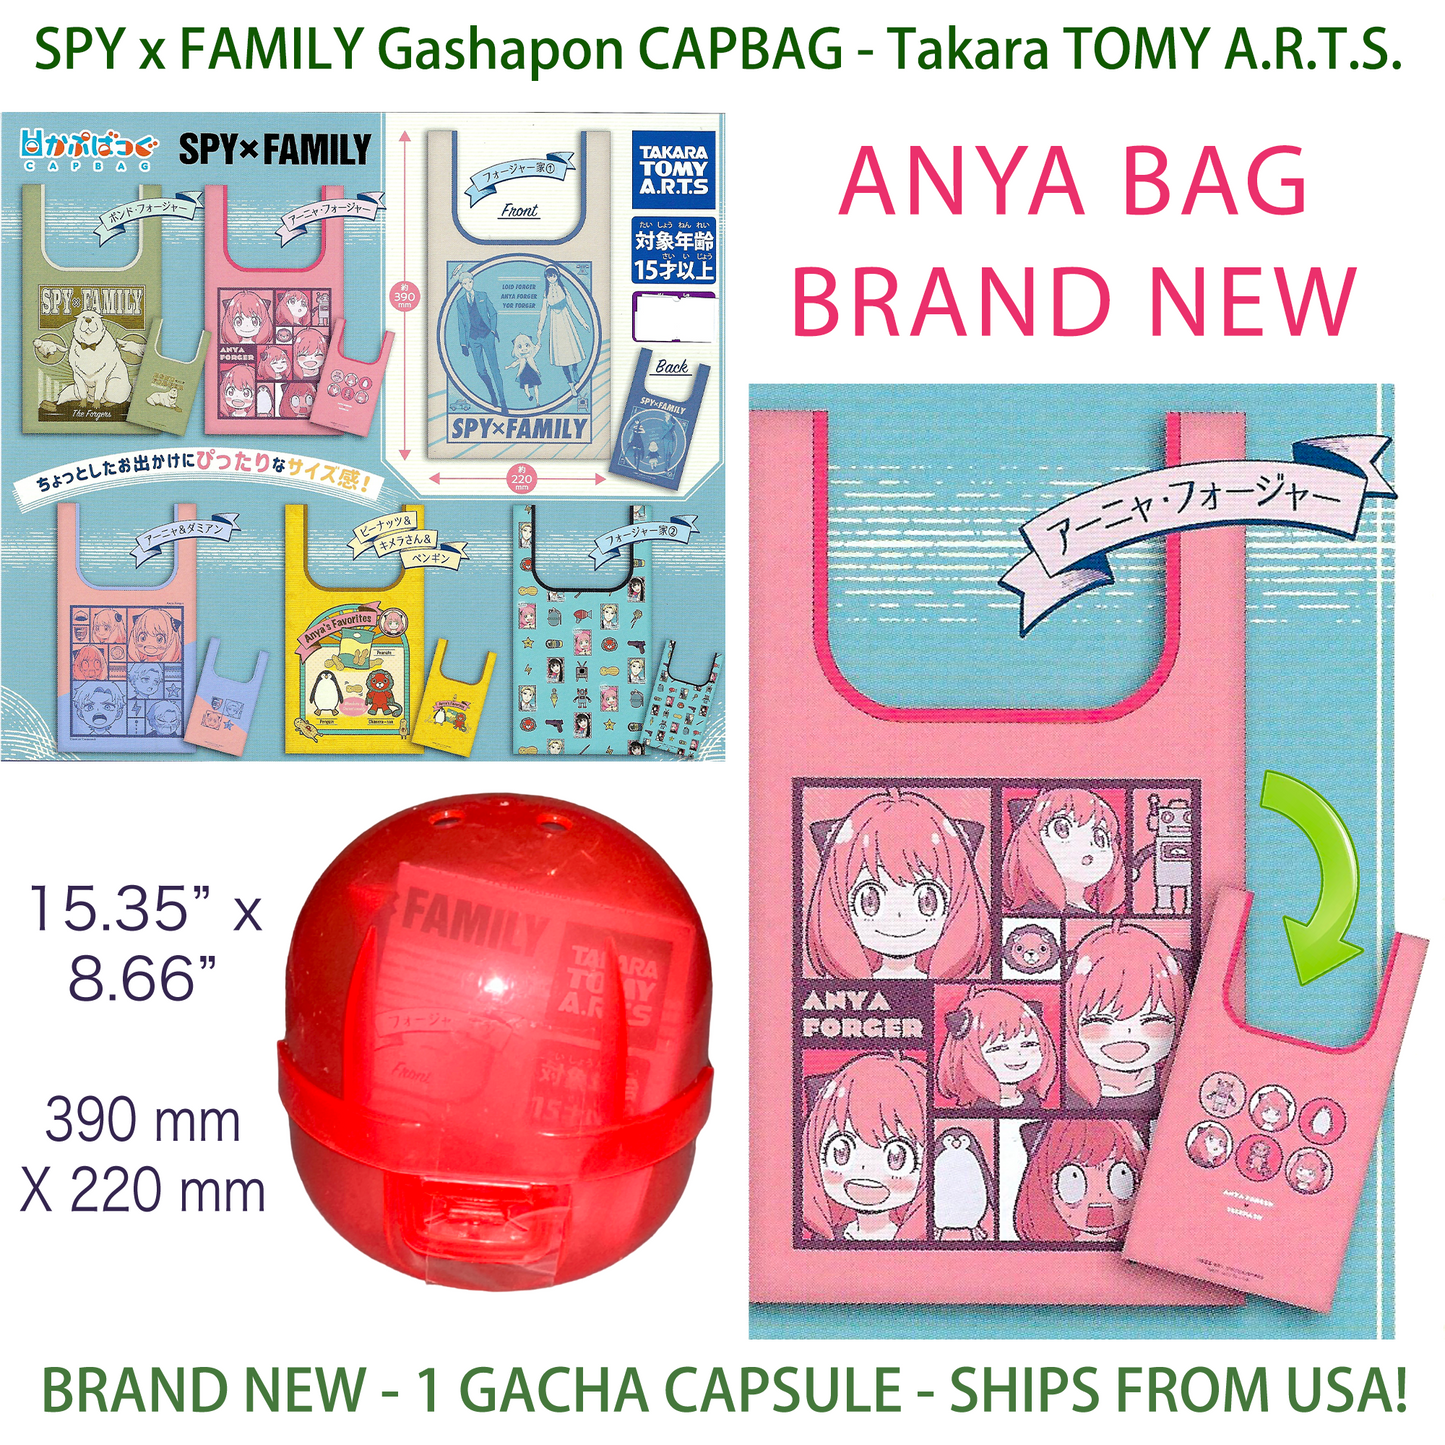 ANYA - SPY x FAMILY CAPBAG - SPYxFAMILY Gashapon Bag - TAKARA TOMY ARTS (NEW)